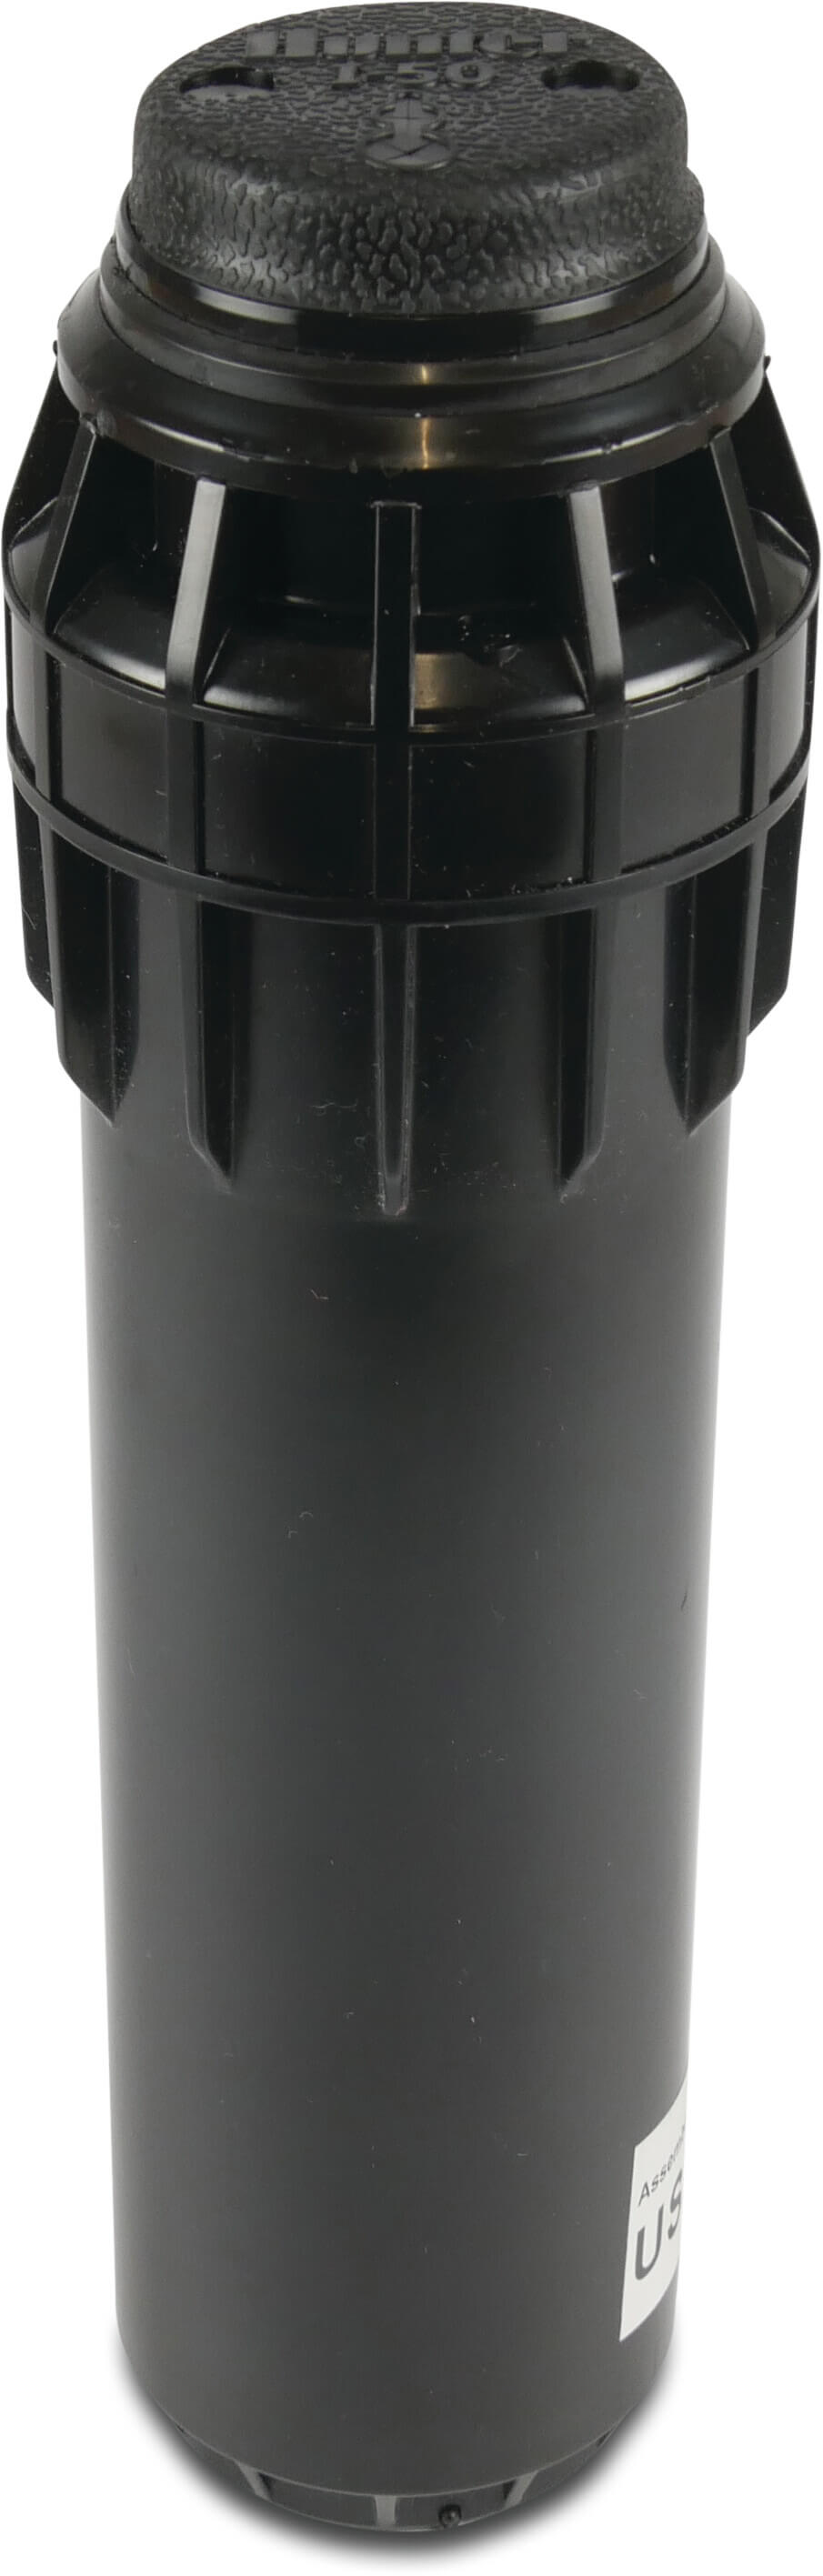 Hunter Pop-up sprinkler plastic 1" male thread 60°- 360° type I-50-06-SS-ON stainless steel